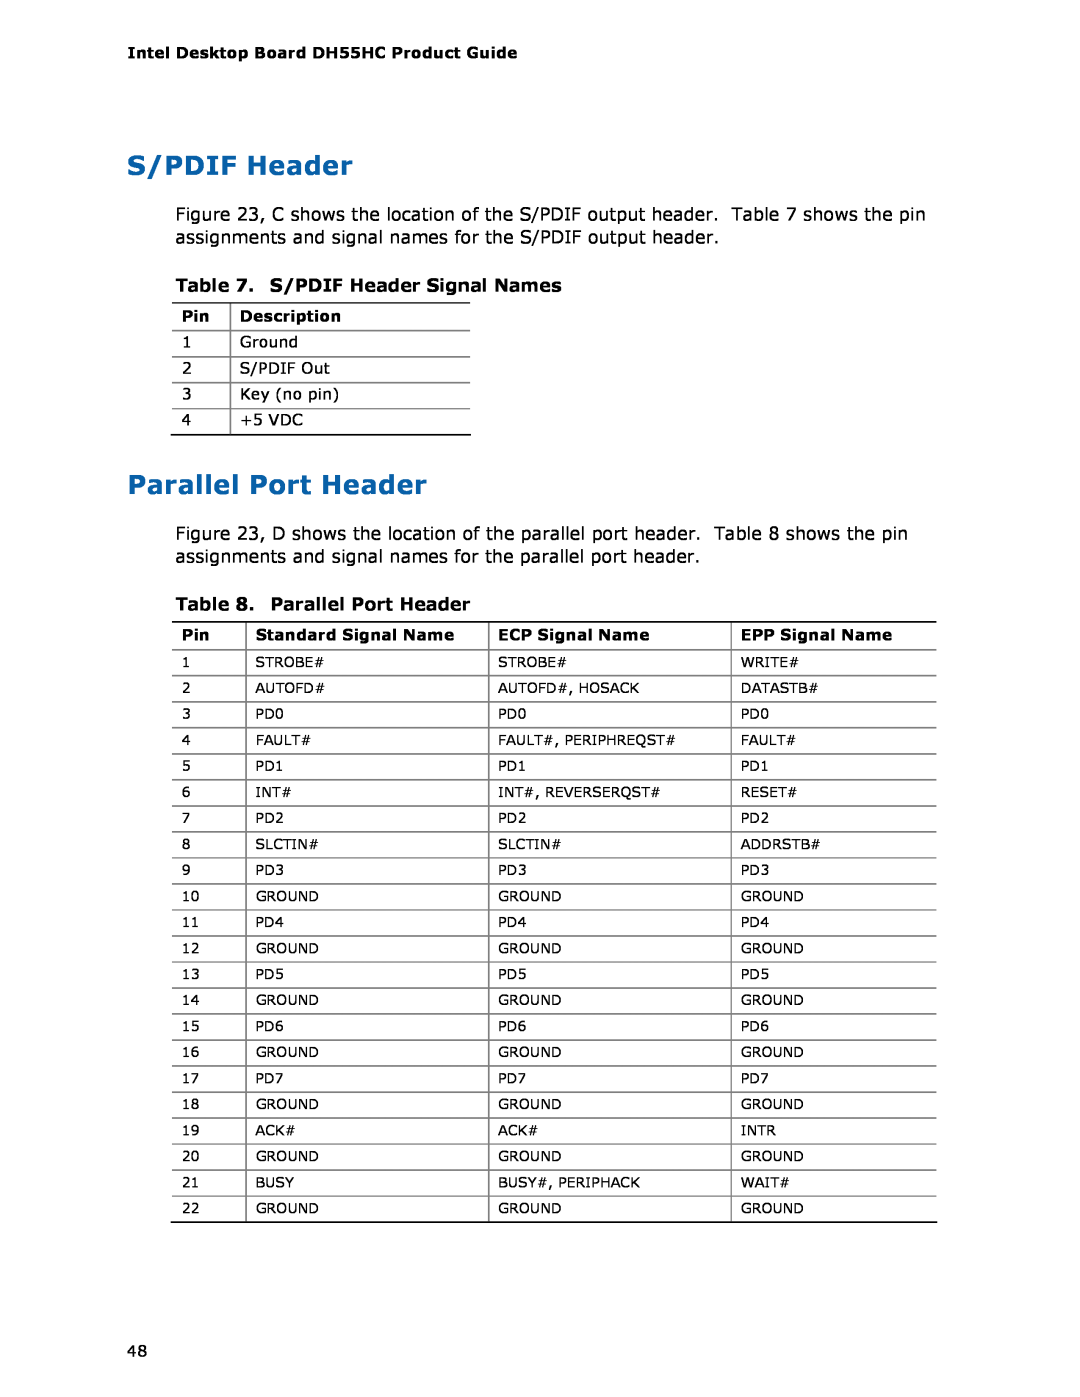 Intel BOXDH55HC manual Parallel Port Header, S/PDIF Header Signal Names 